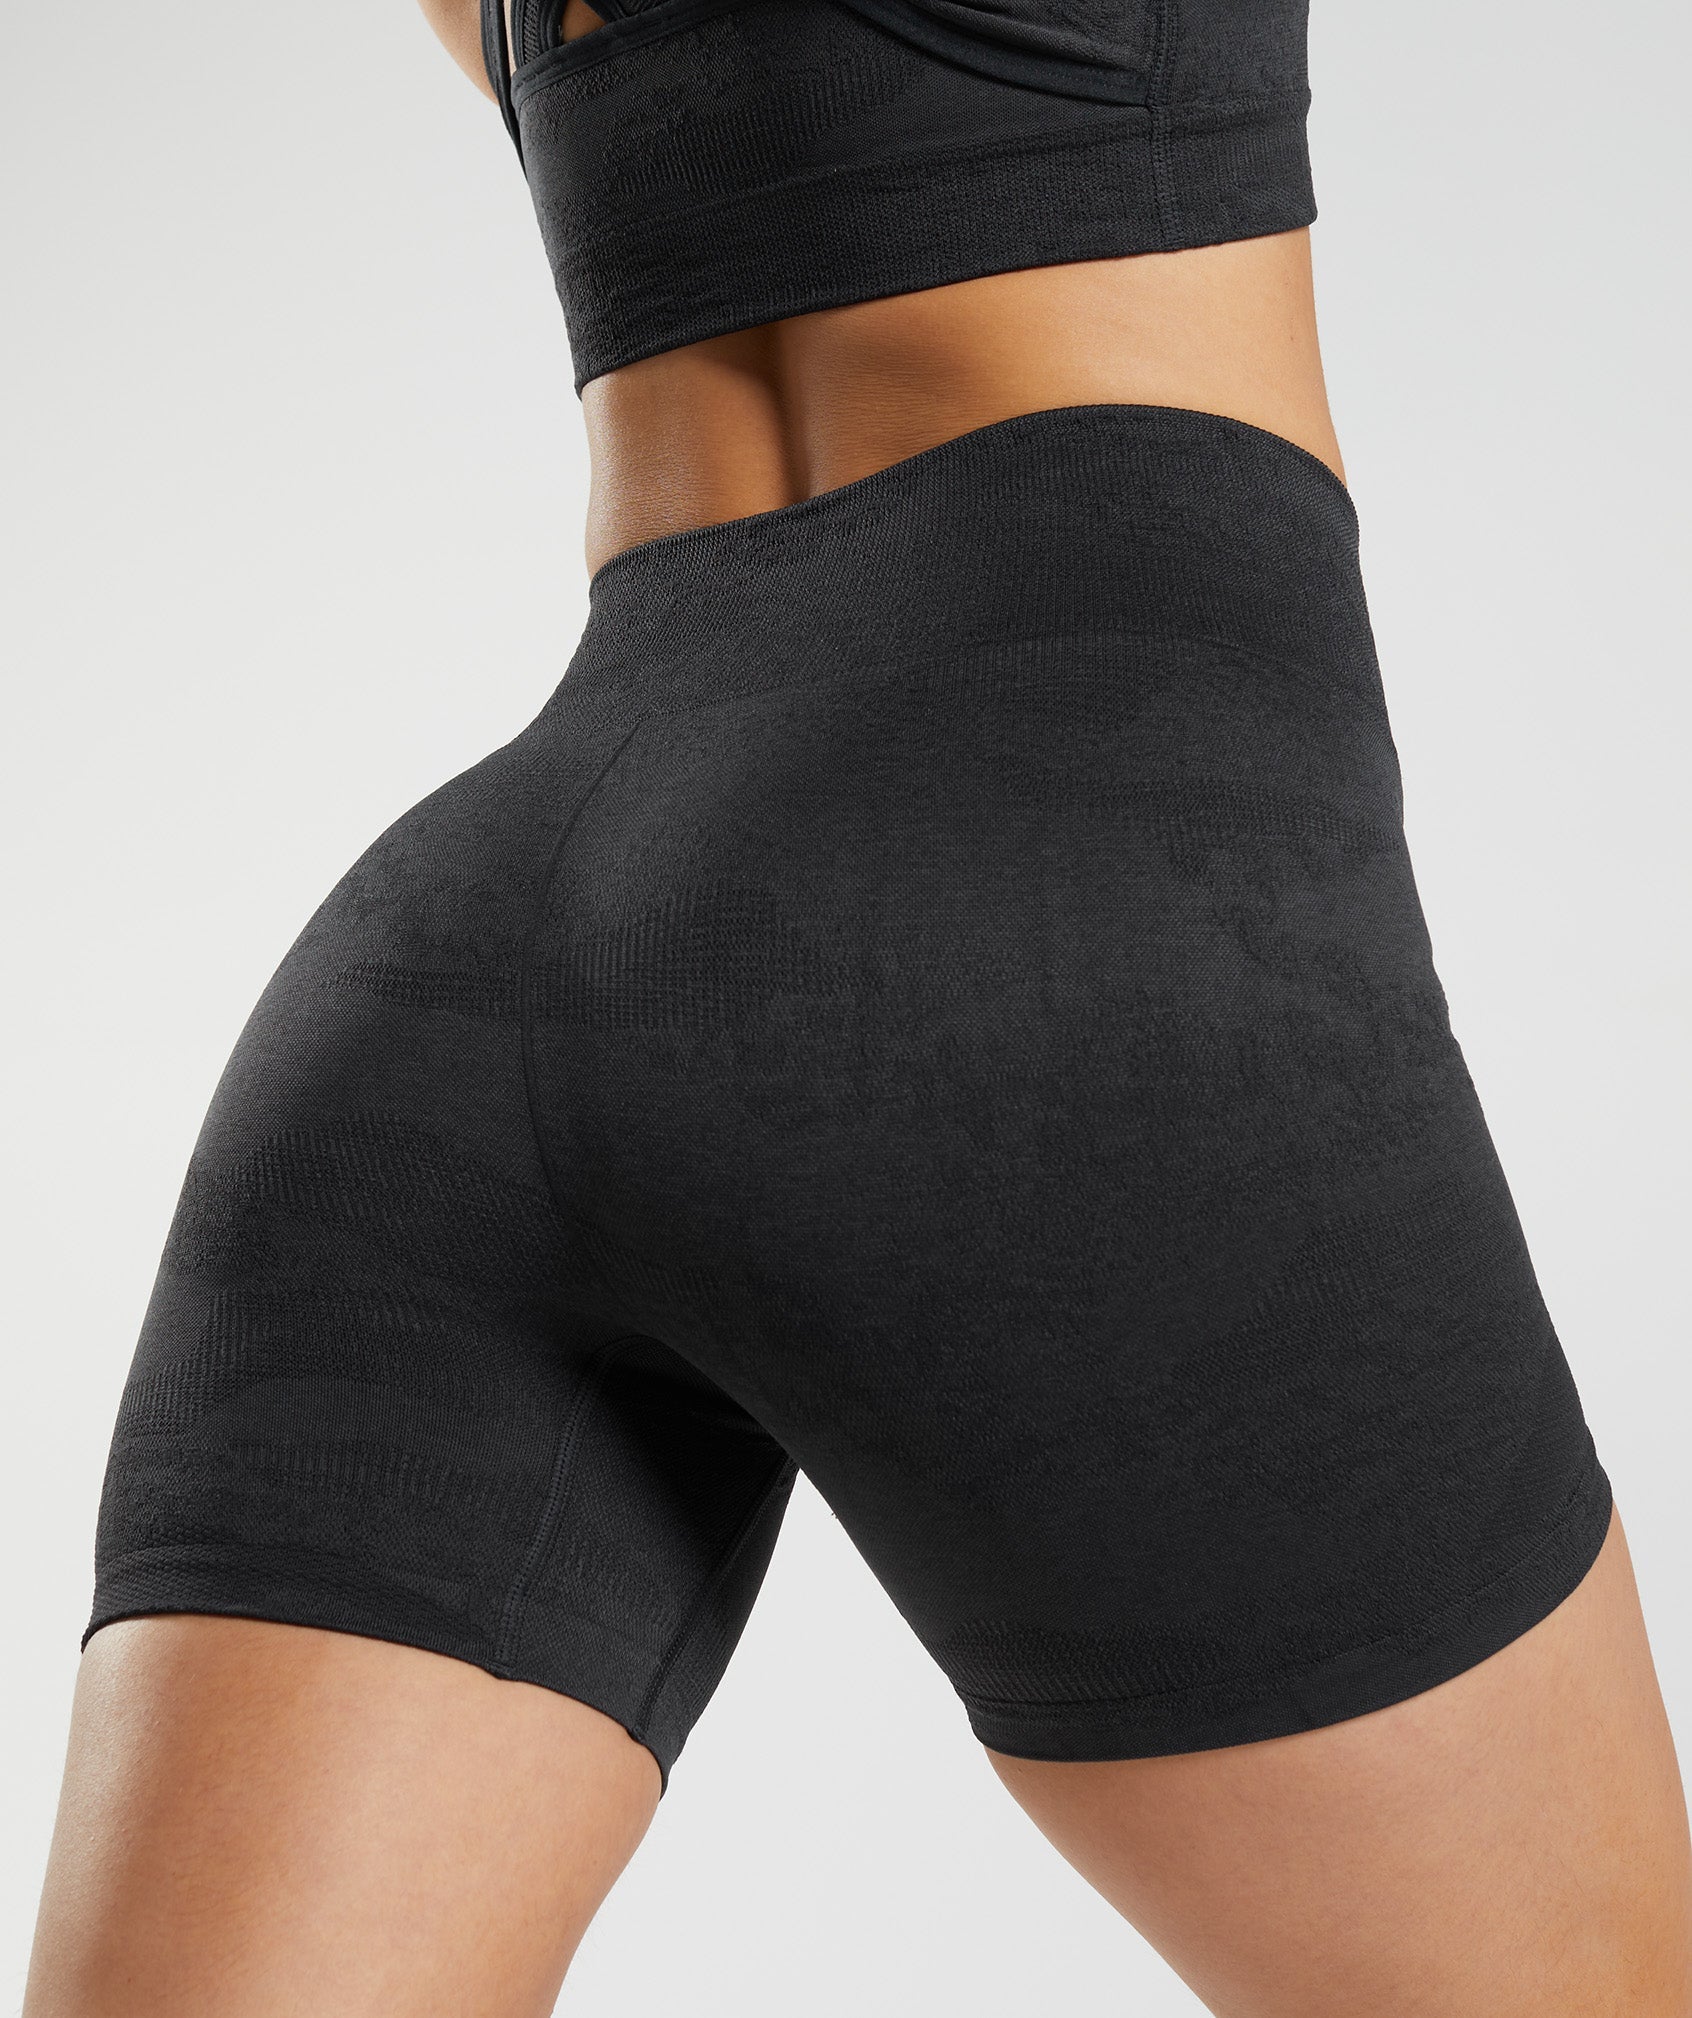 Adapt Camo Seamless Shorts in Black/Onyx Grey